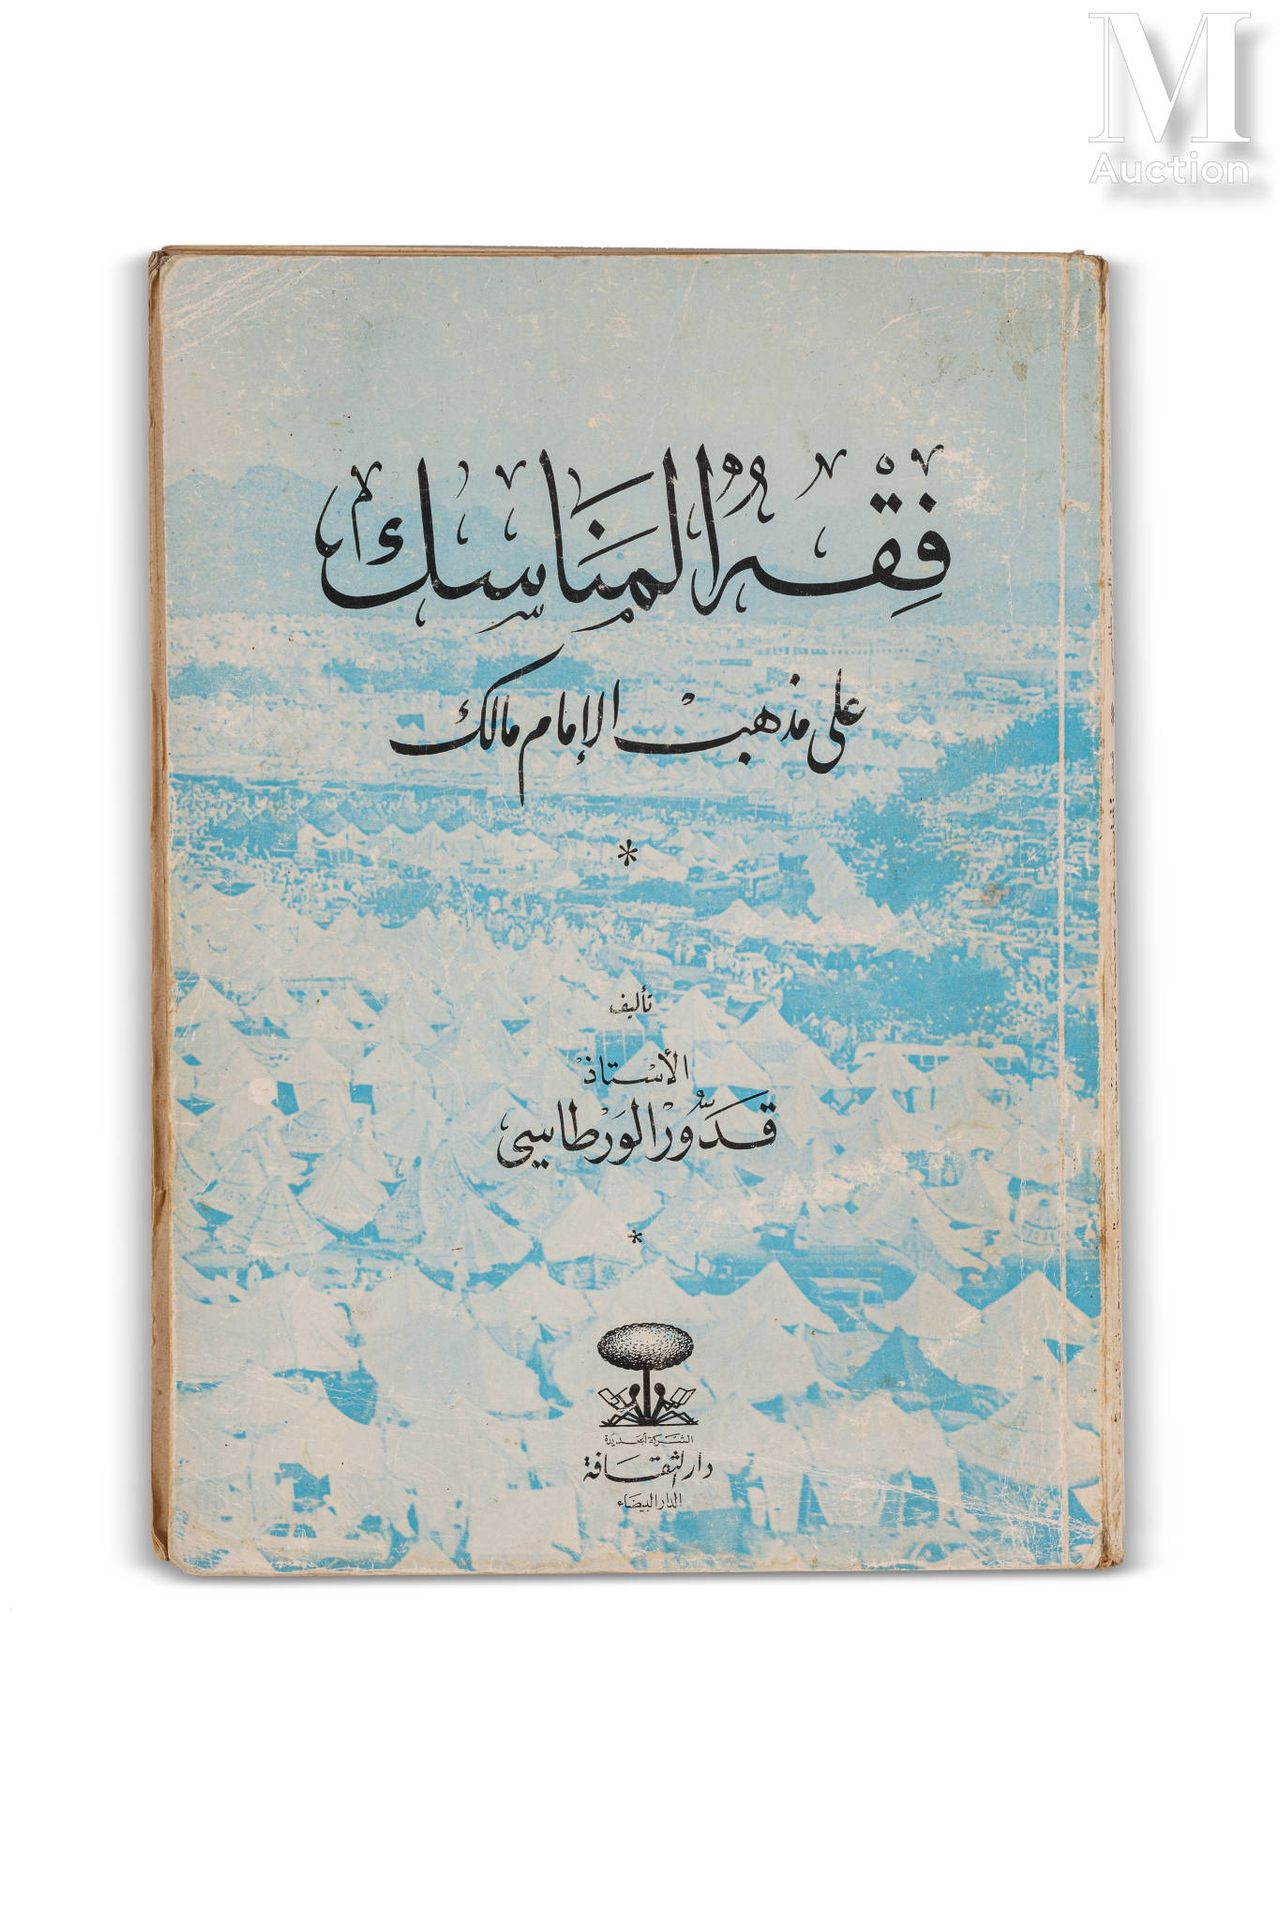 Qaddur Al Wartasi (1912-1994) 根据伊玛目马利克的戒律，伊斯兰教的朝圣学说，或者简单地说，摩洛哥朝圣指南

Dar Al Thaqa&hellip;